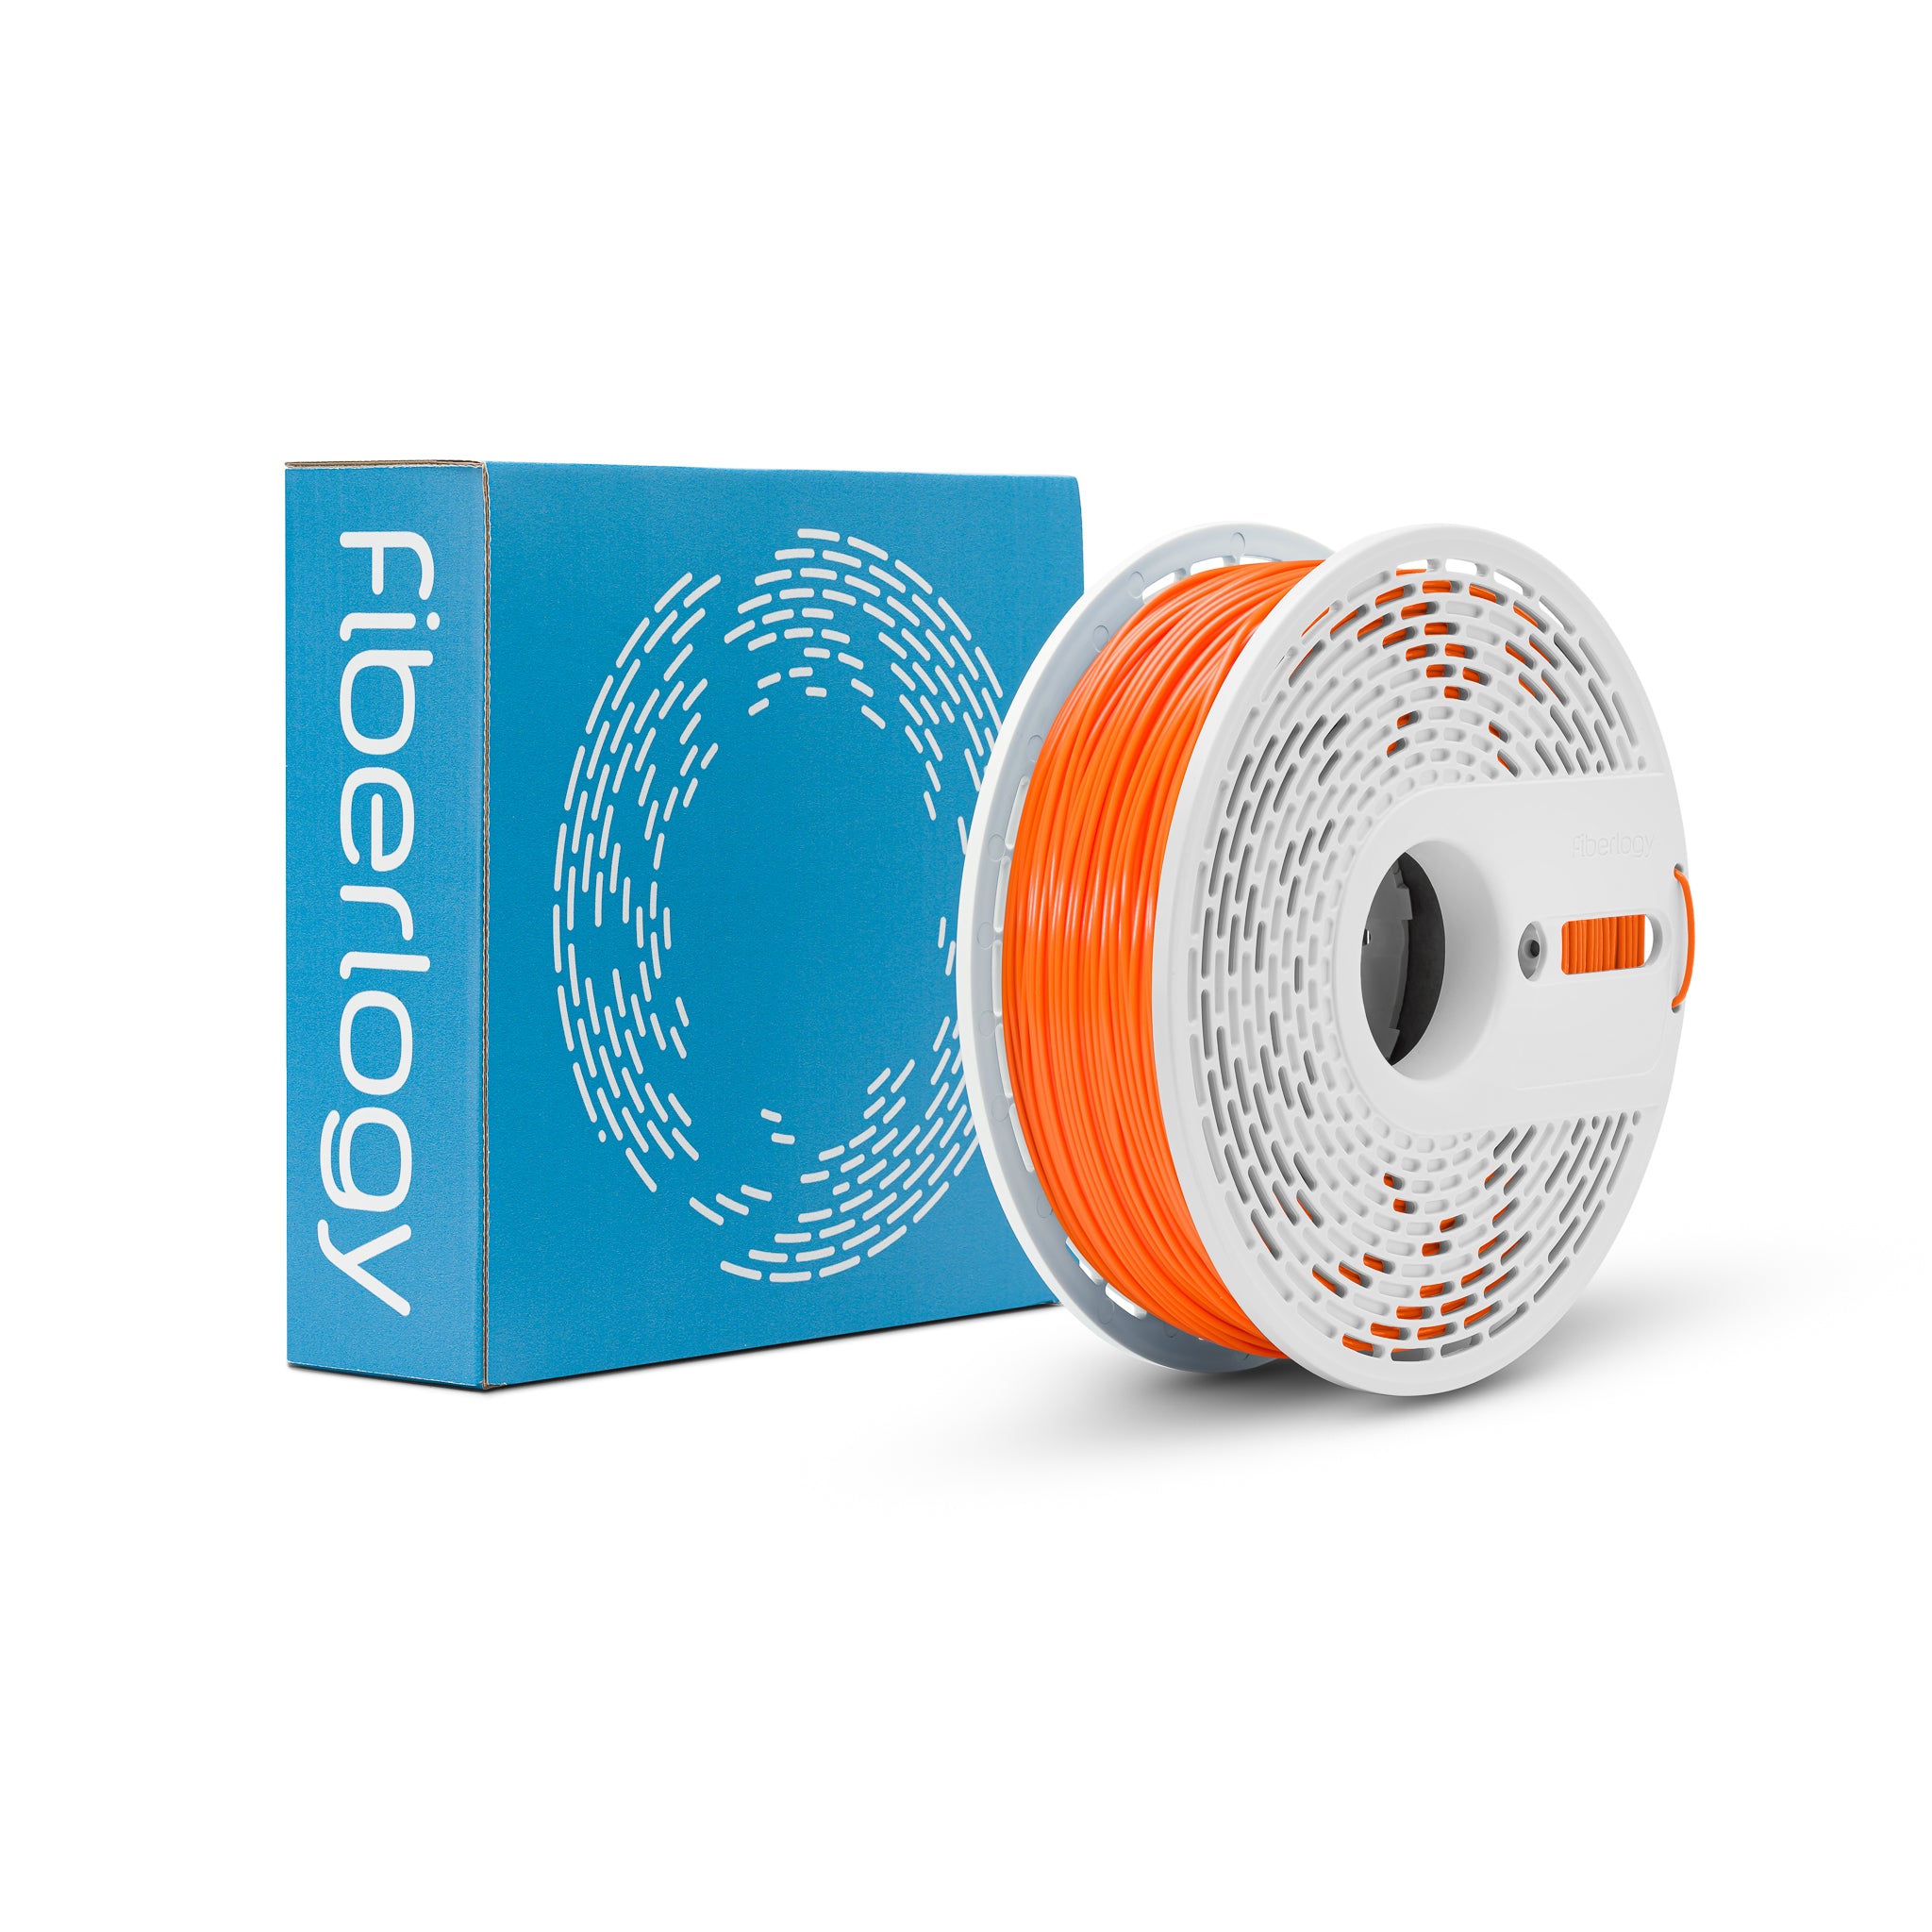 Fiberlogy Impact PLA - Orange [1.75mm] (38,71€/Kg)